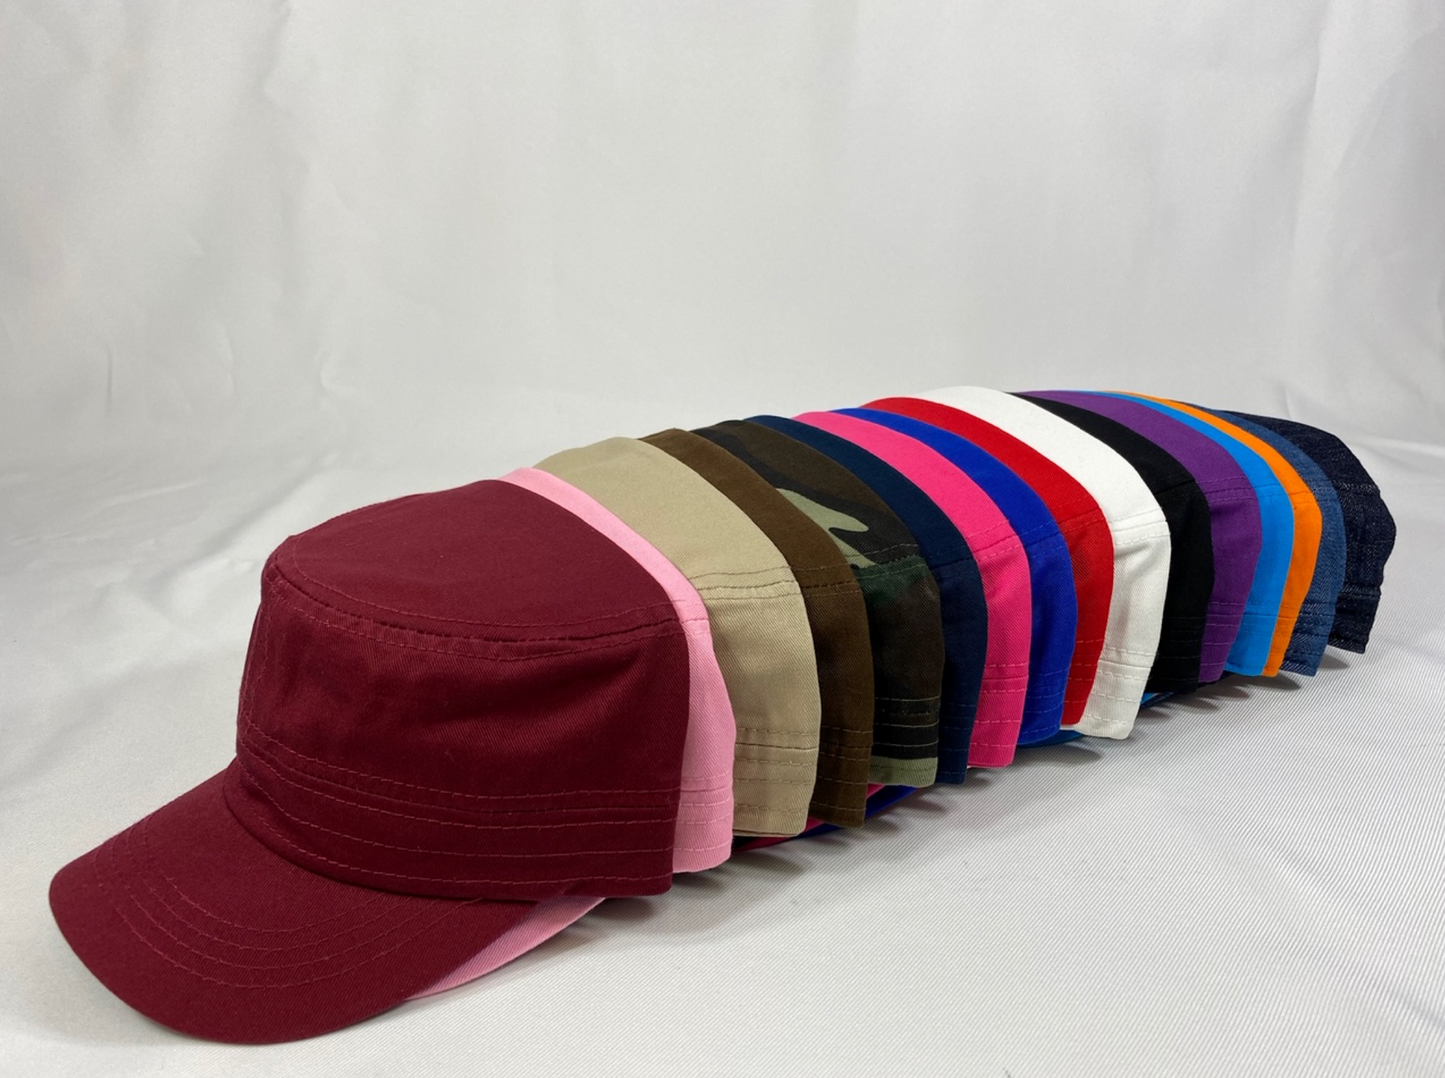 Basketball Mom Fire Hat, Basketball Hat, Rhinestone Hat, Embroidered Hats, Rhinestone Cap, Hats, Caps